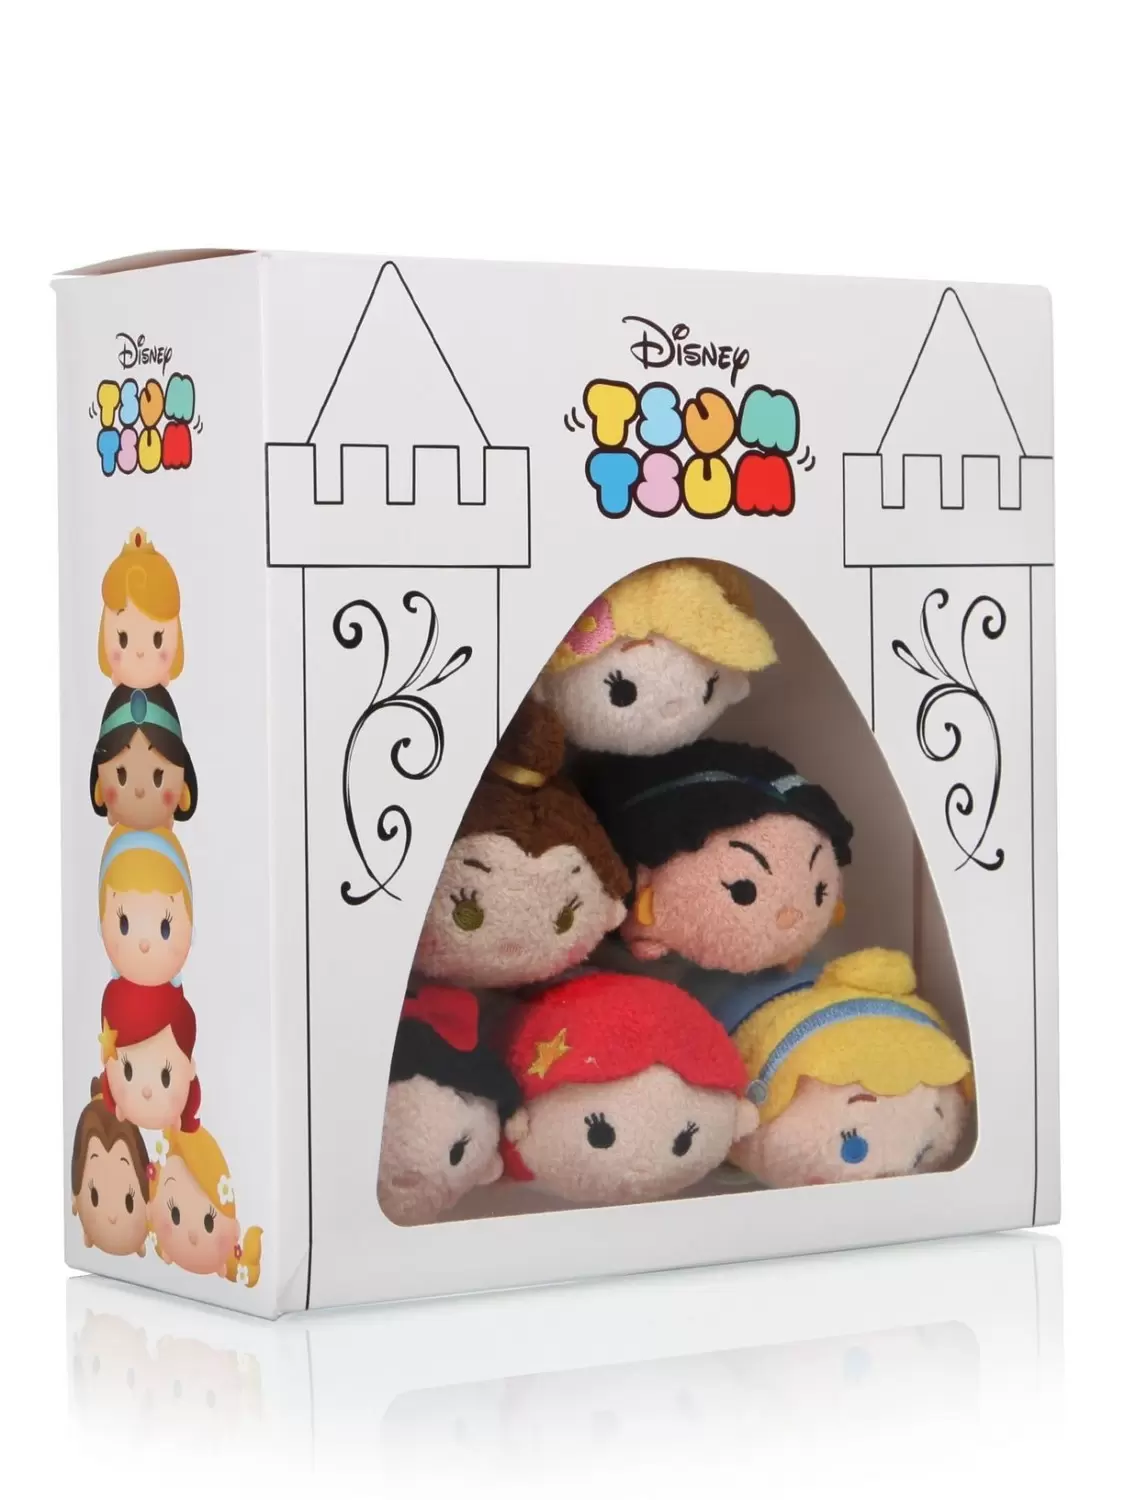 Tsum Tsum Plush Bag And Box Sets - Disney Princesses Set